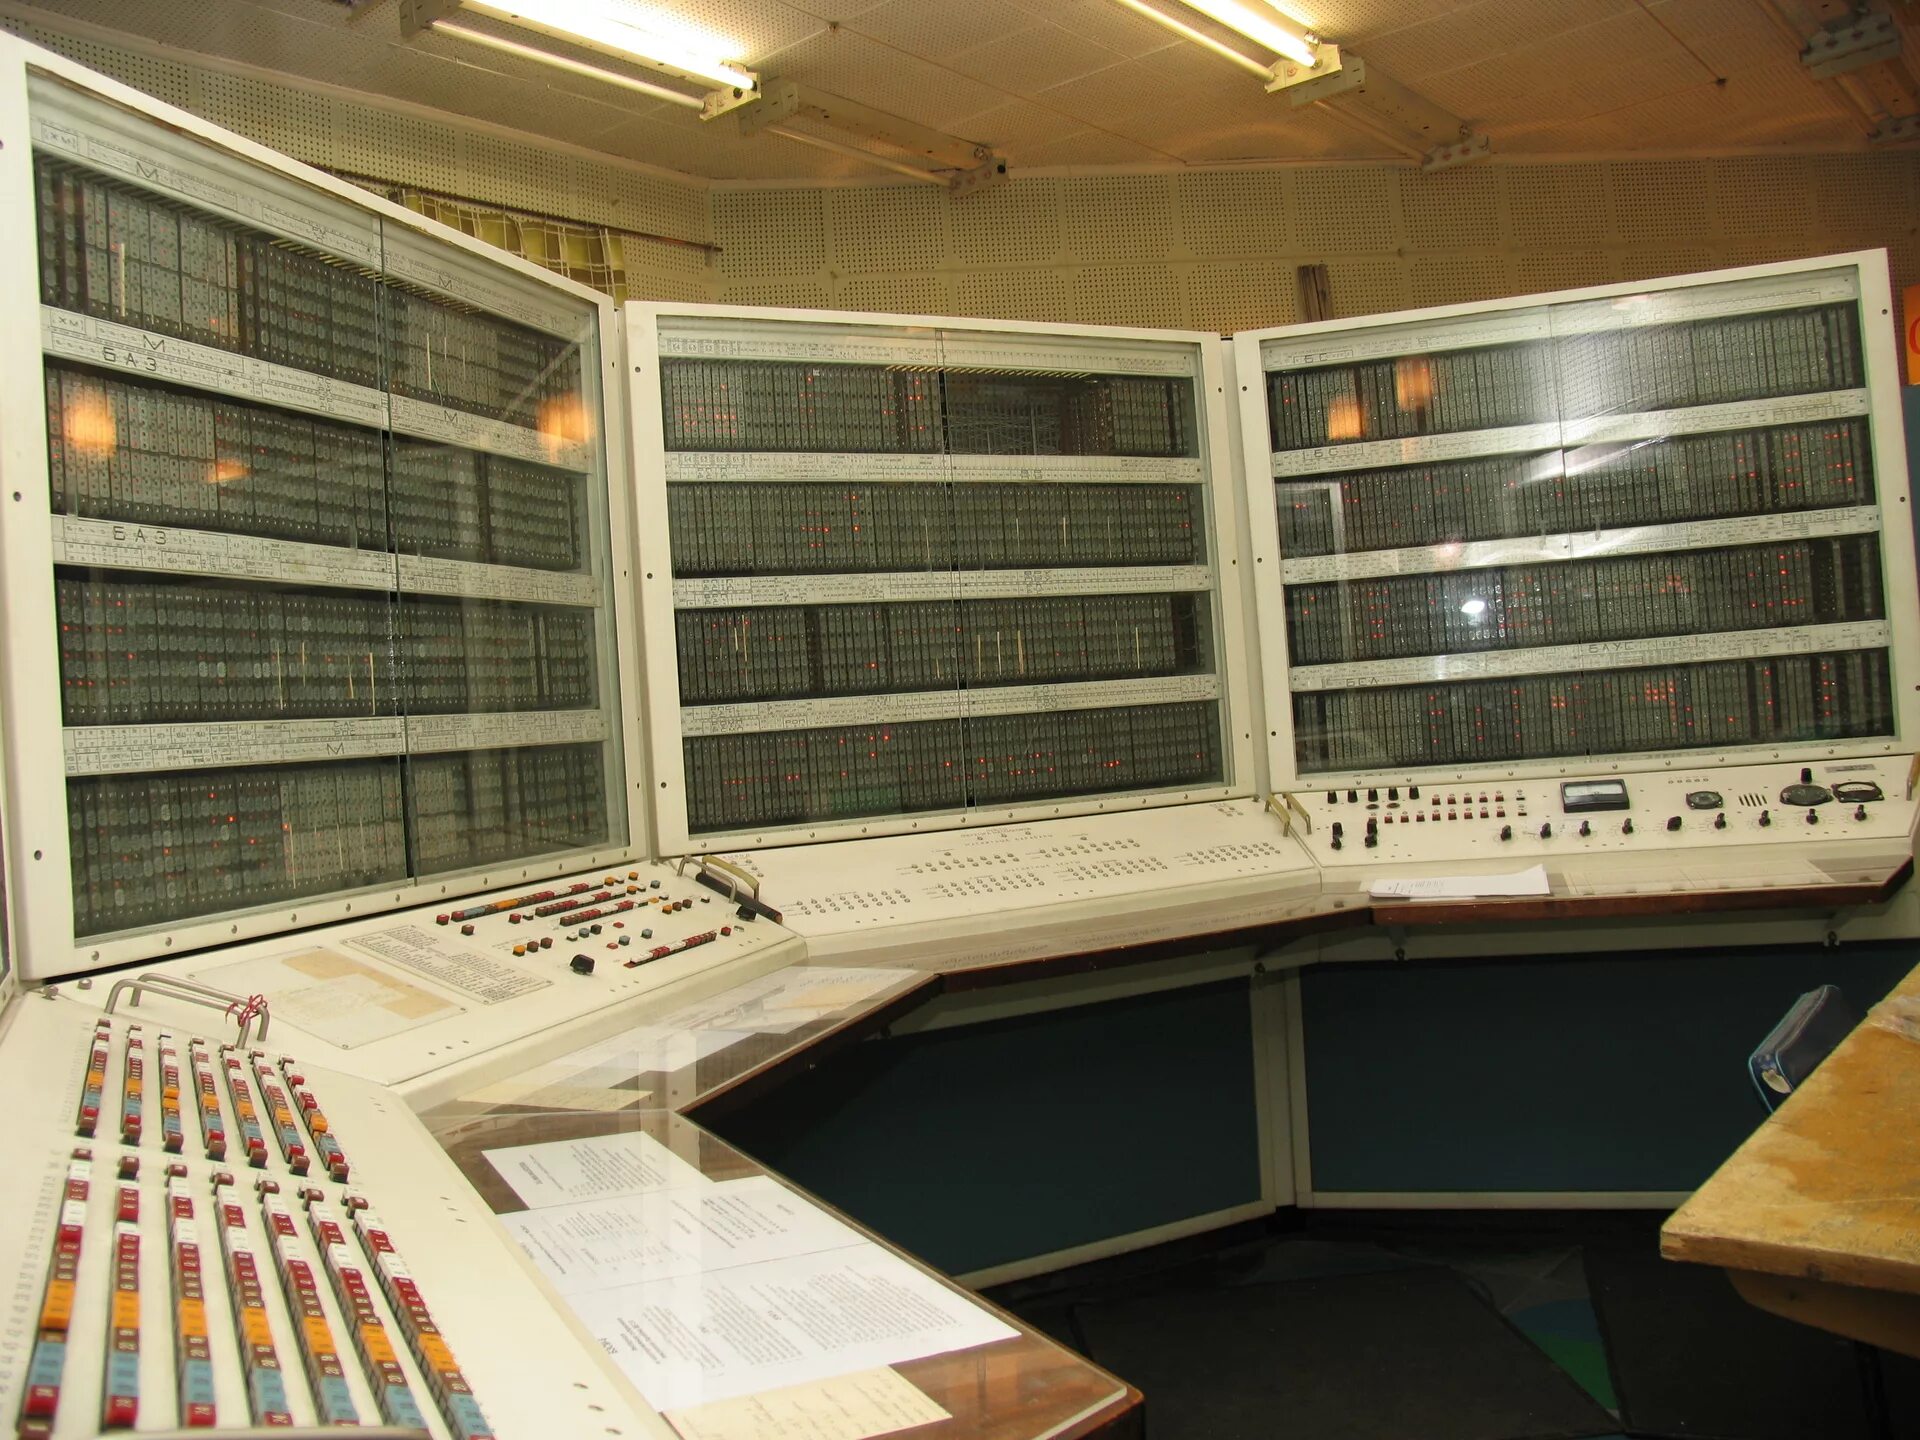 Электронный компьютер электронная машина. ЭВМ 2 поколения БЭСМ-6. БЭСМ-6 поколение ЭВМ. БЭСМ 6 Лебедева. БЭСМ-6 (1967 год).